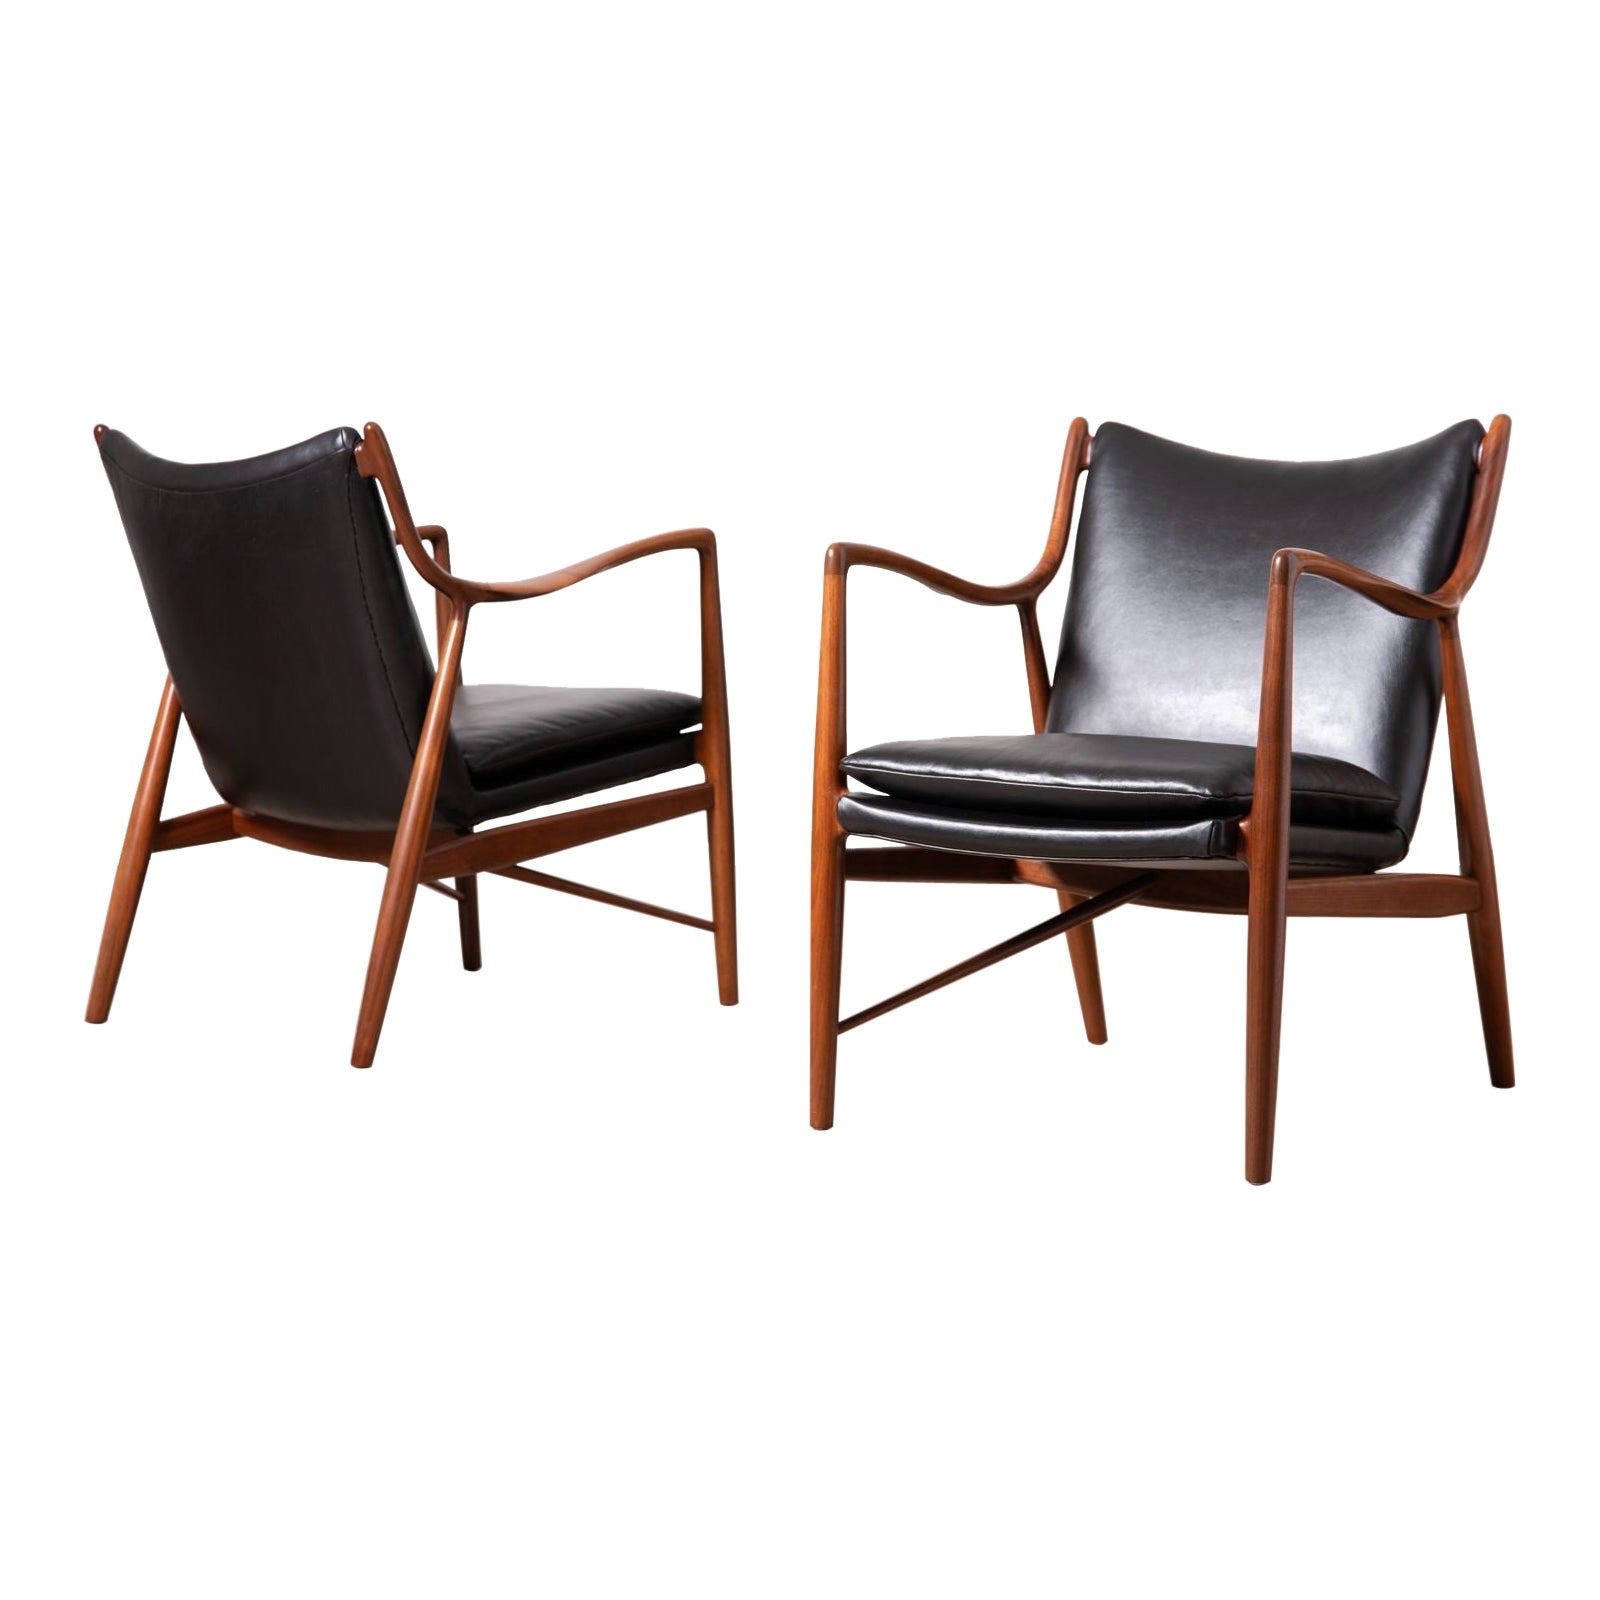 Finn Juhl NV-45 Scandinavian Lounge Chairs in Walnut and Black Leather 1950s For Sale